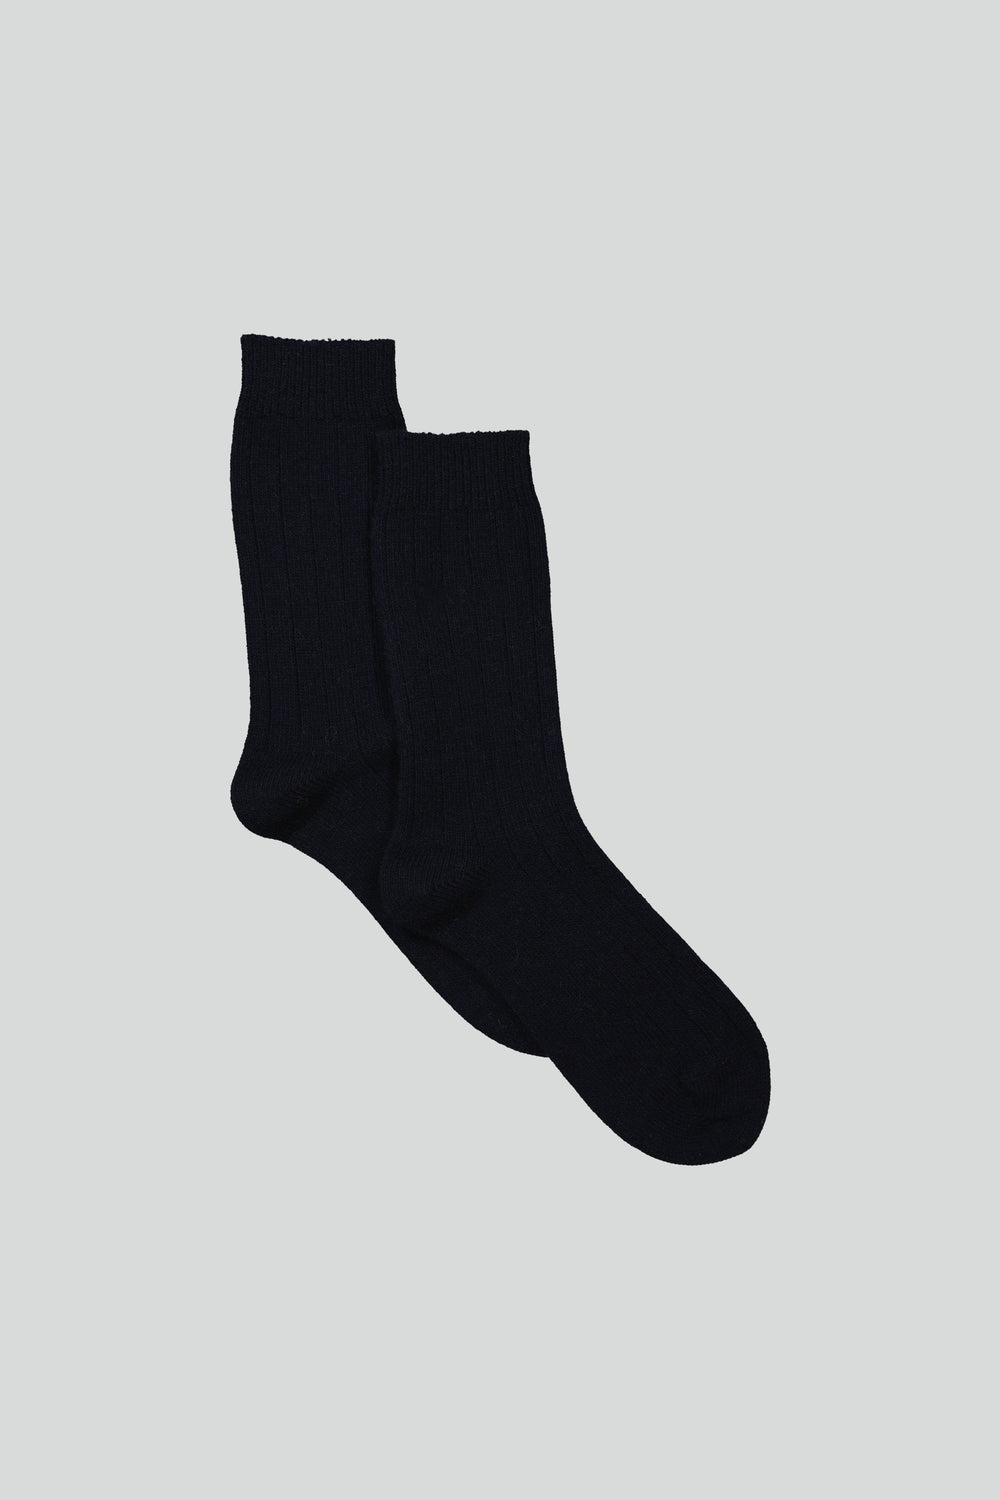 NN07 Sock One Logo 9055 Wool Sock in Navy Blue | Buster McGee